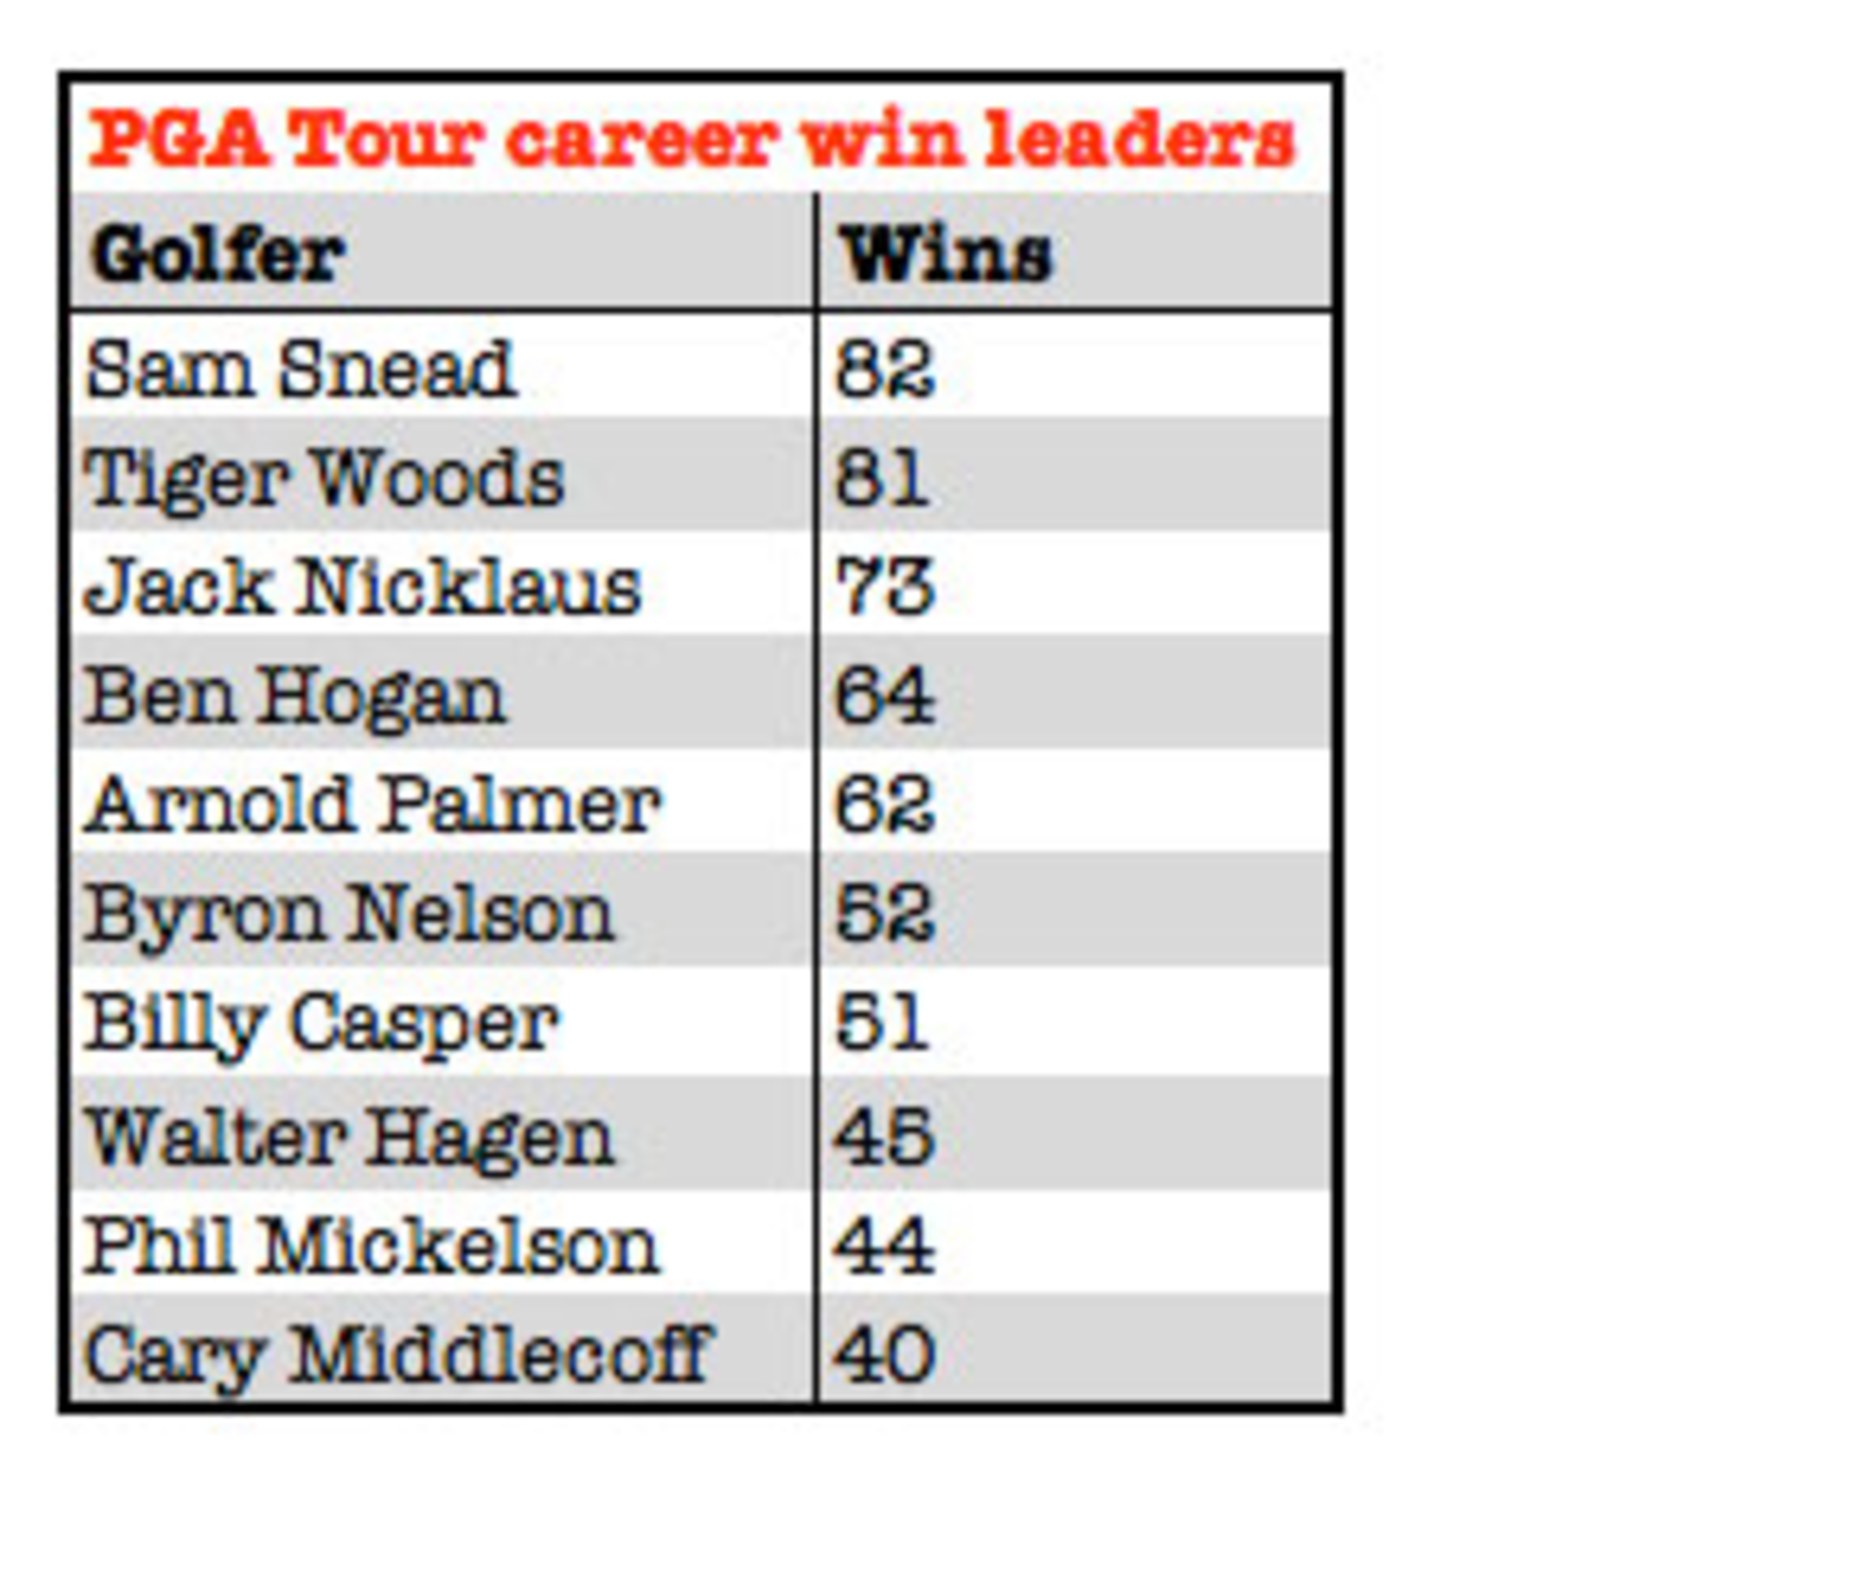 pga tour career wins list